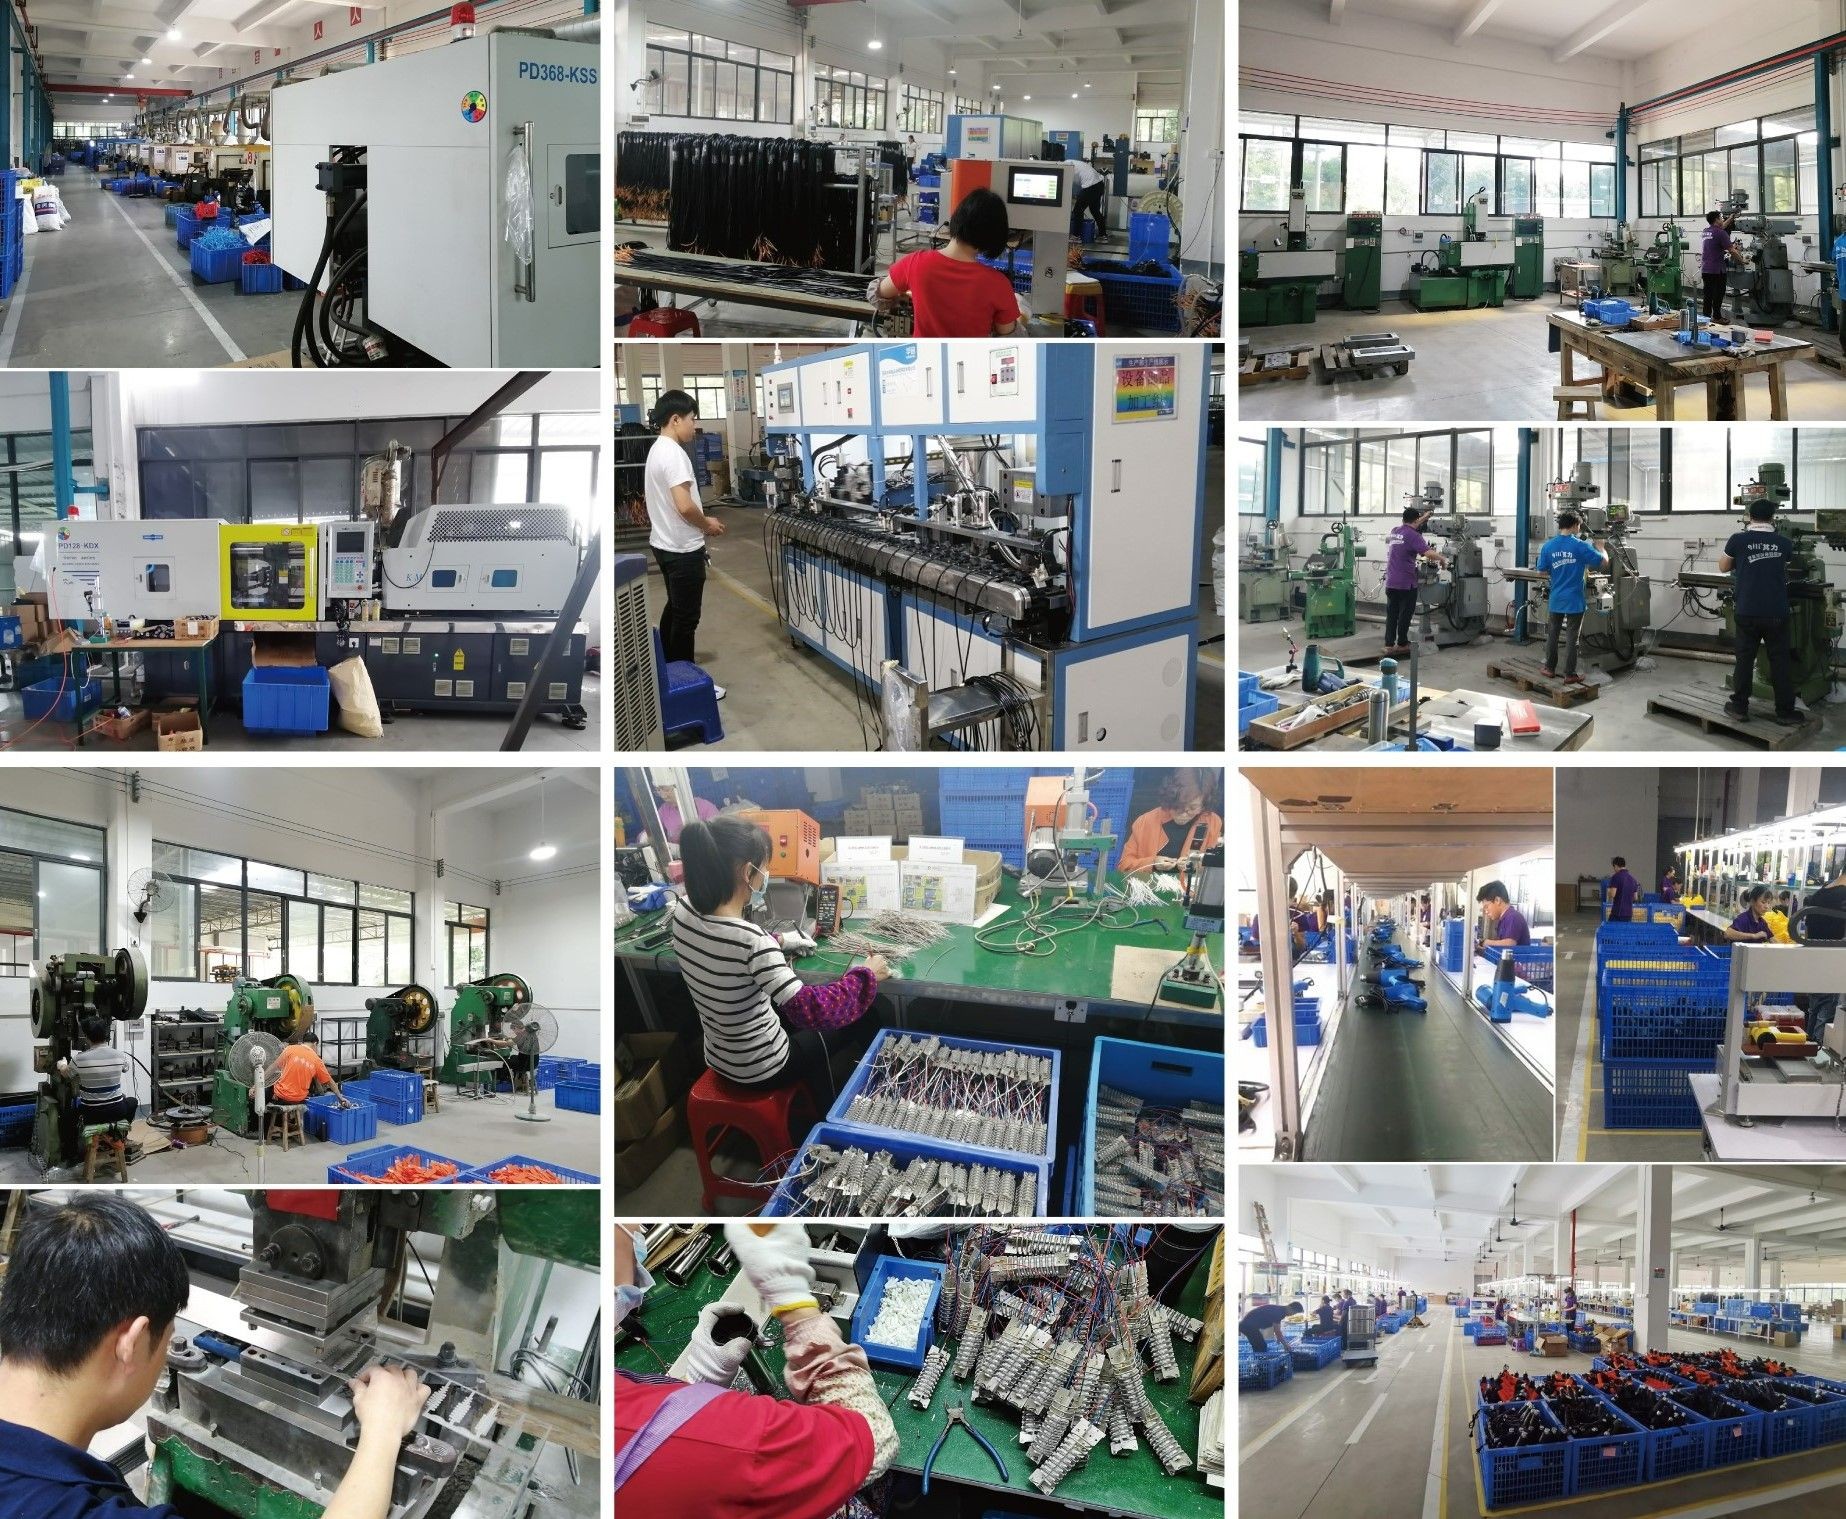 Foshan Qili Technology Co., Ltd